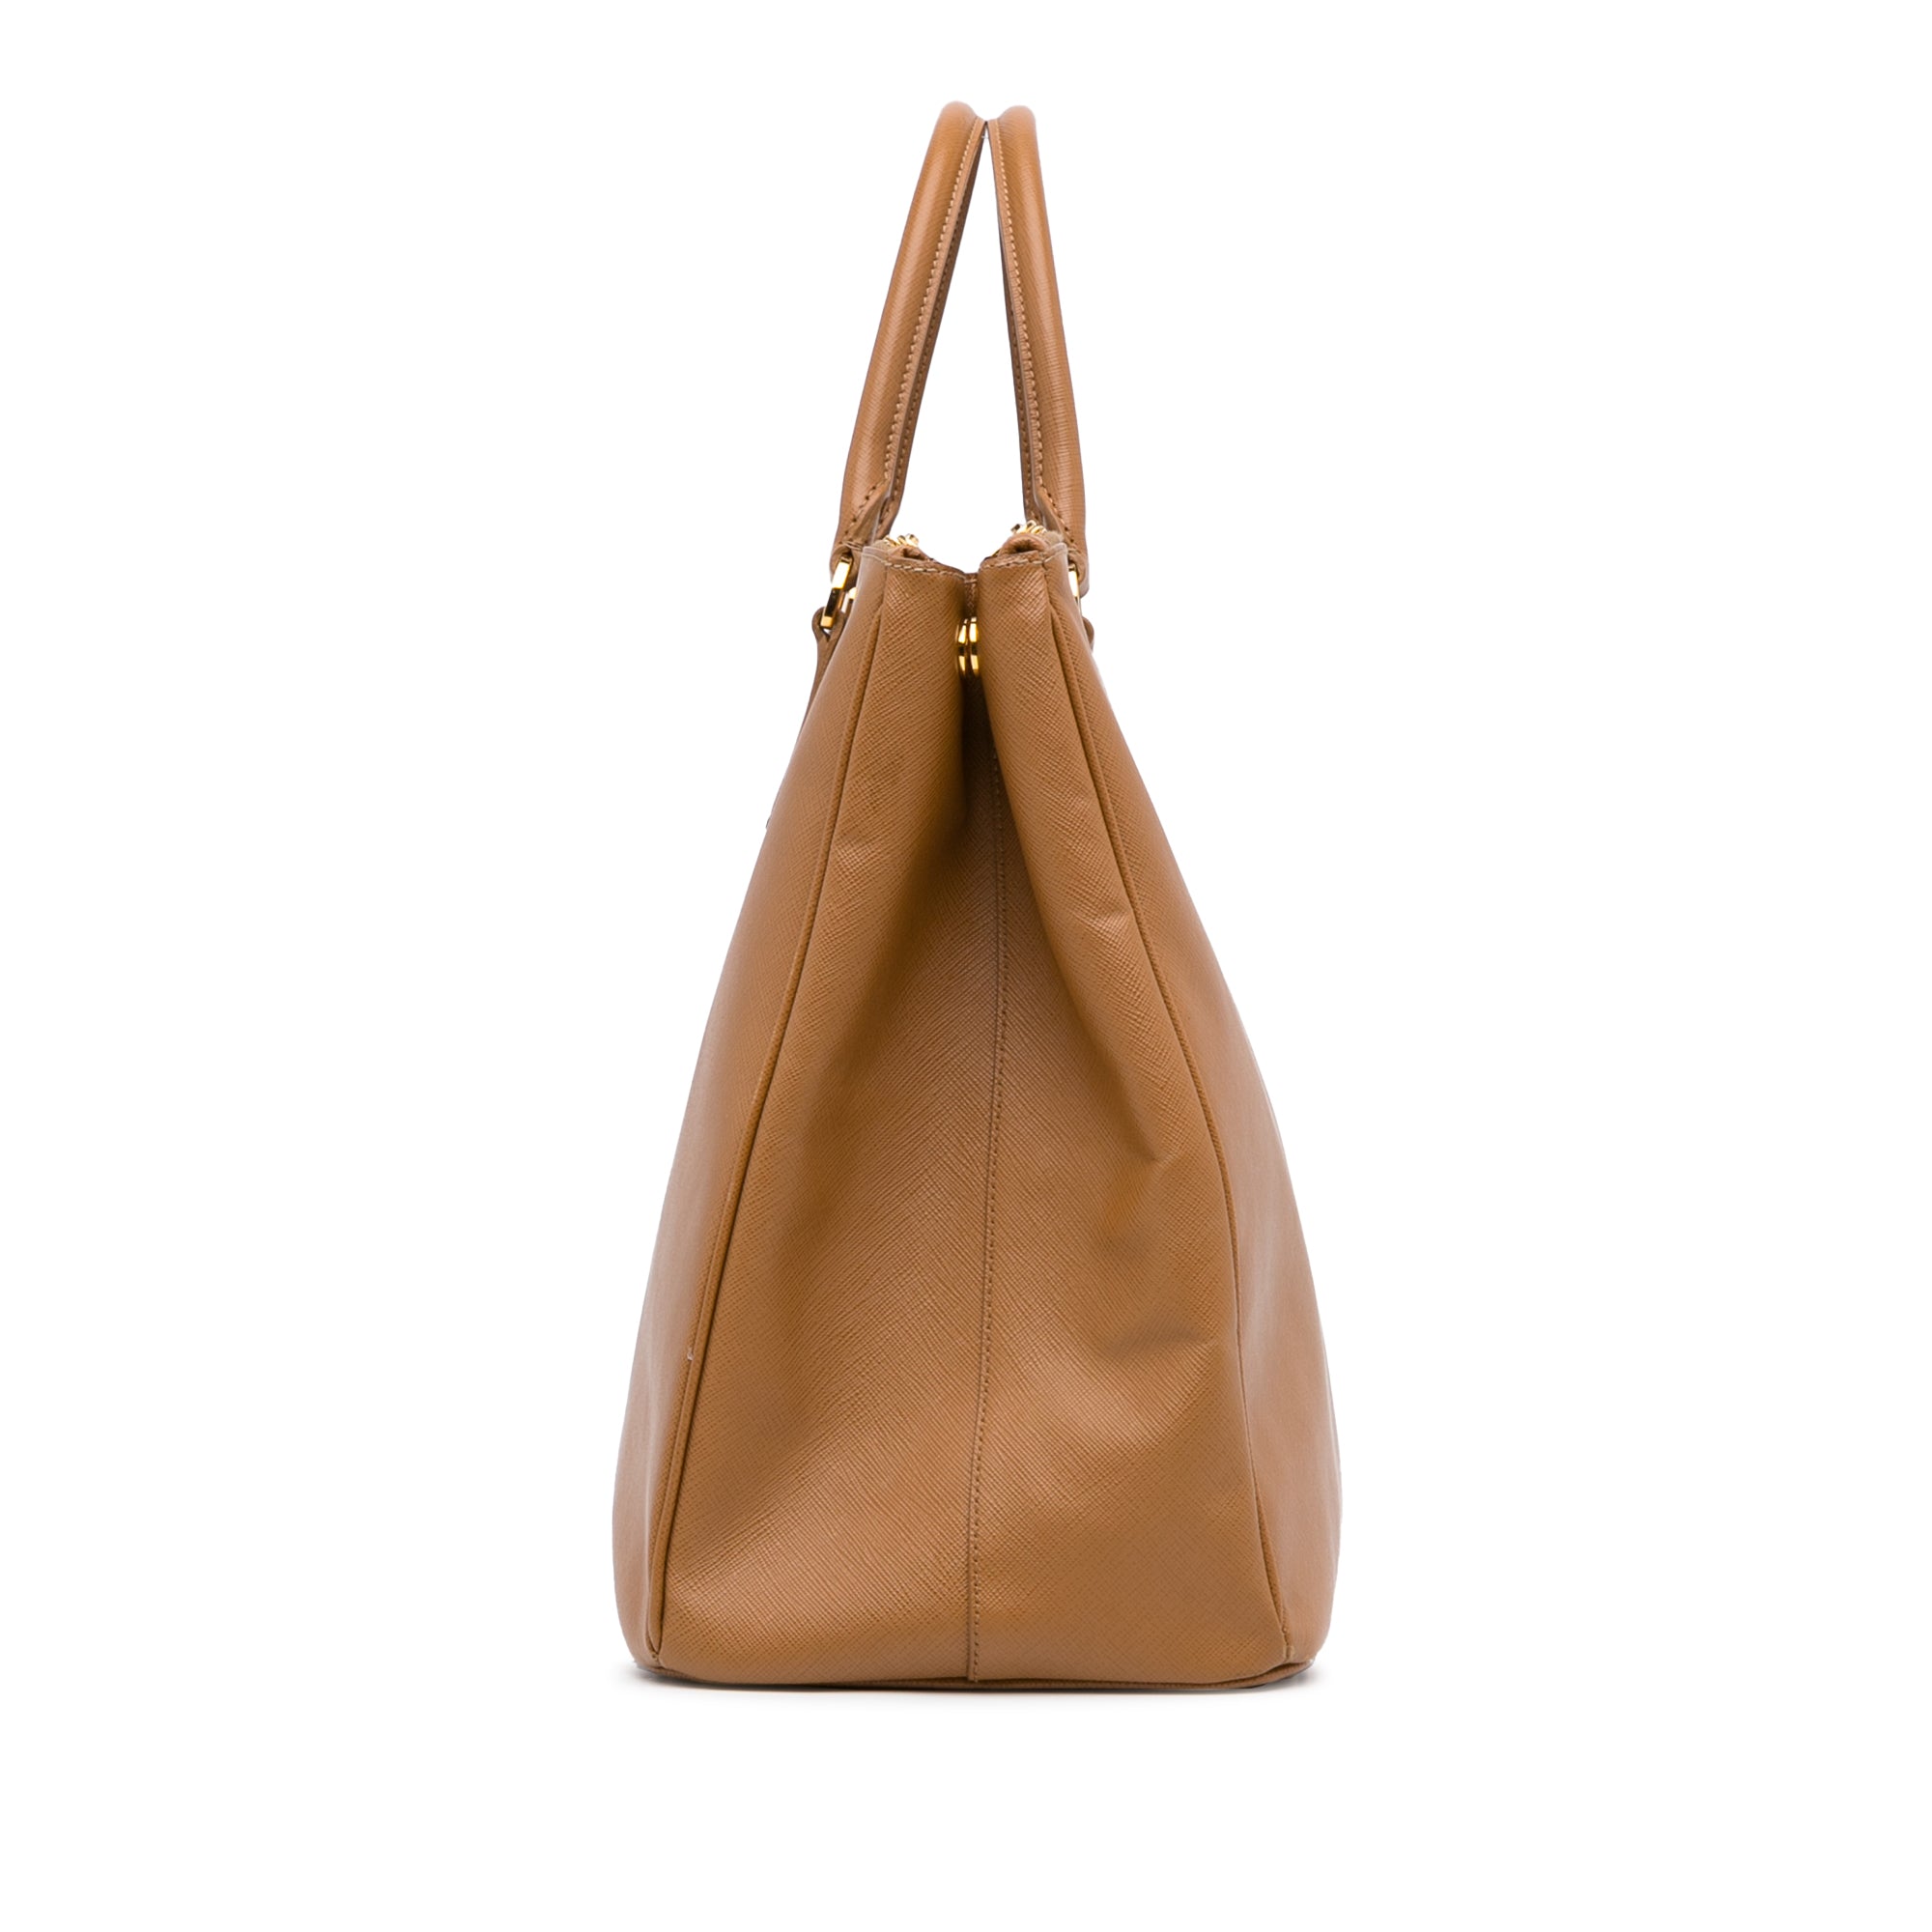 Review: Prada Saffiano Lux / Galleria Double Zip Tote Bag - Extra